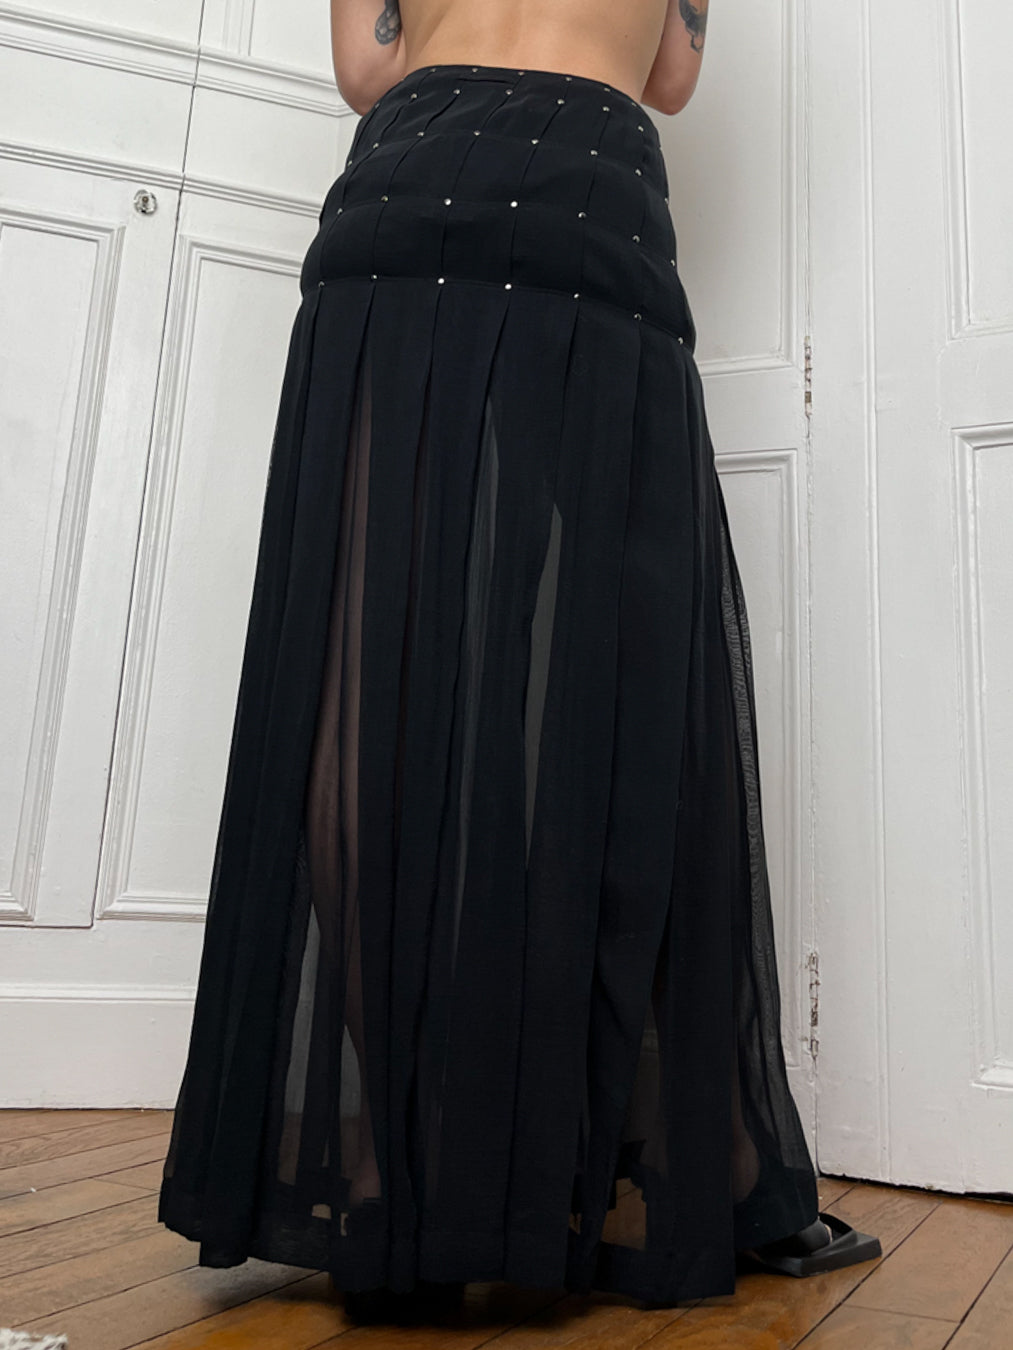 Jean Paul Gaultier - Jean Paul Gaultier - Long Black See-through Skirt w/ Silver Details